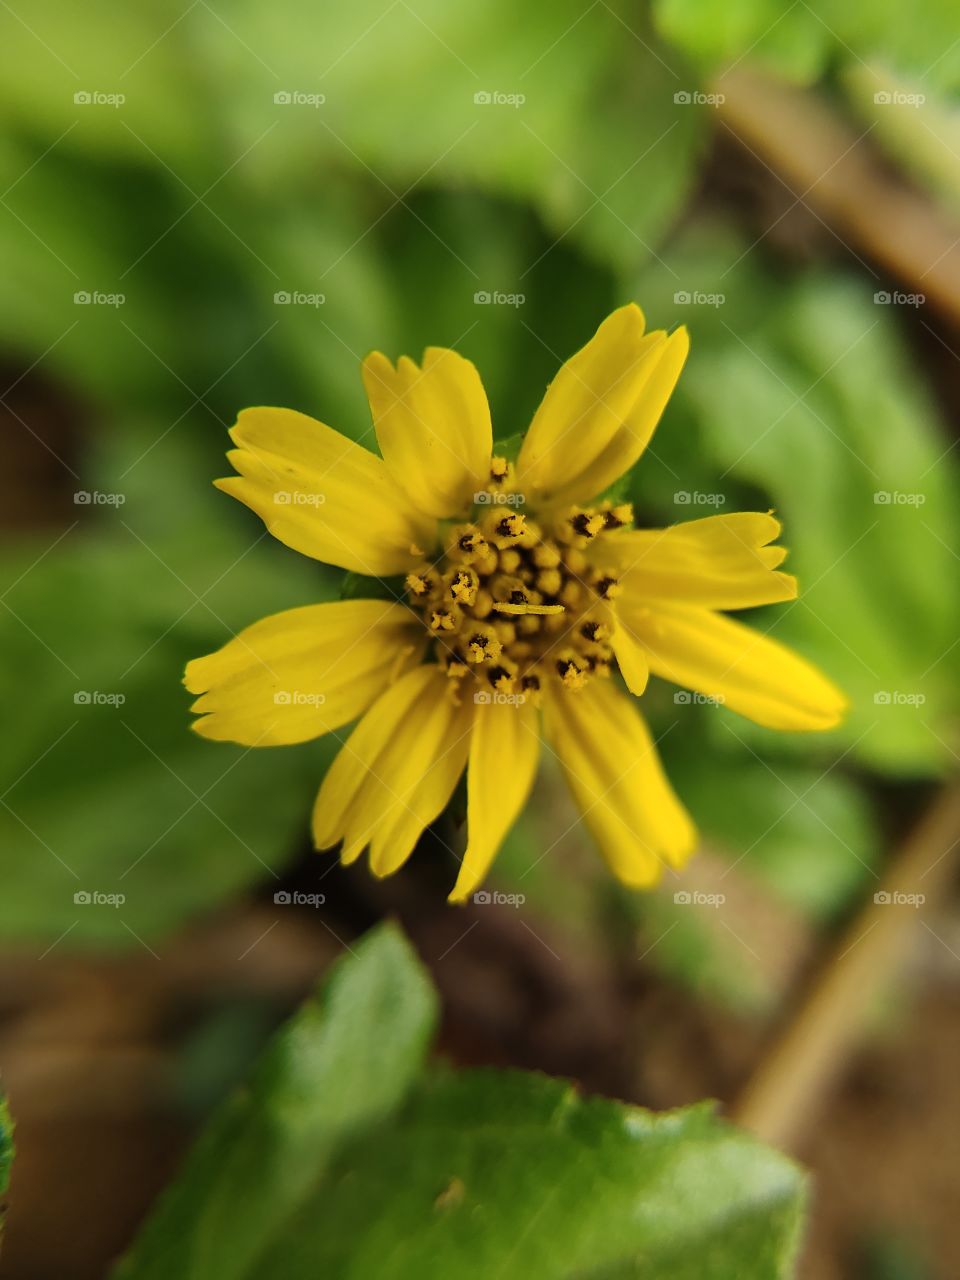 blur yellow flower